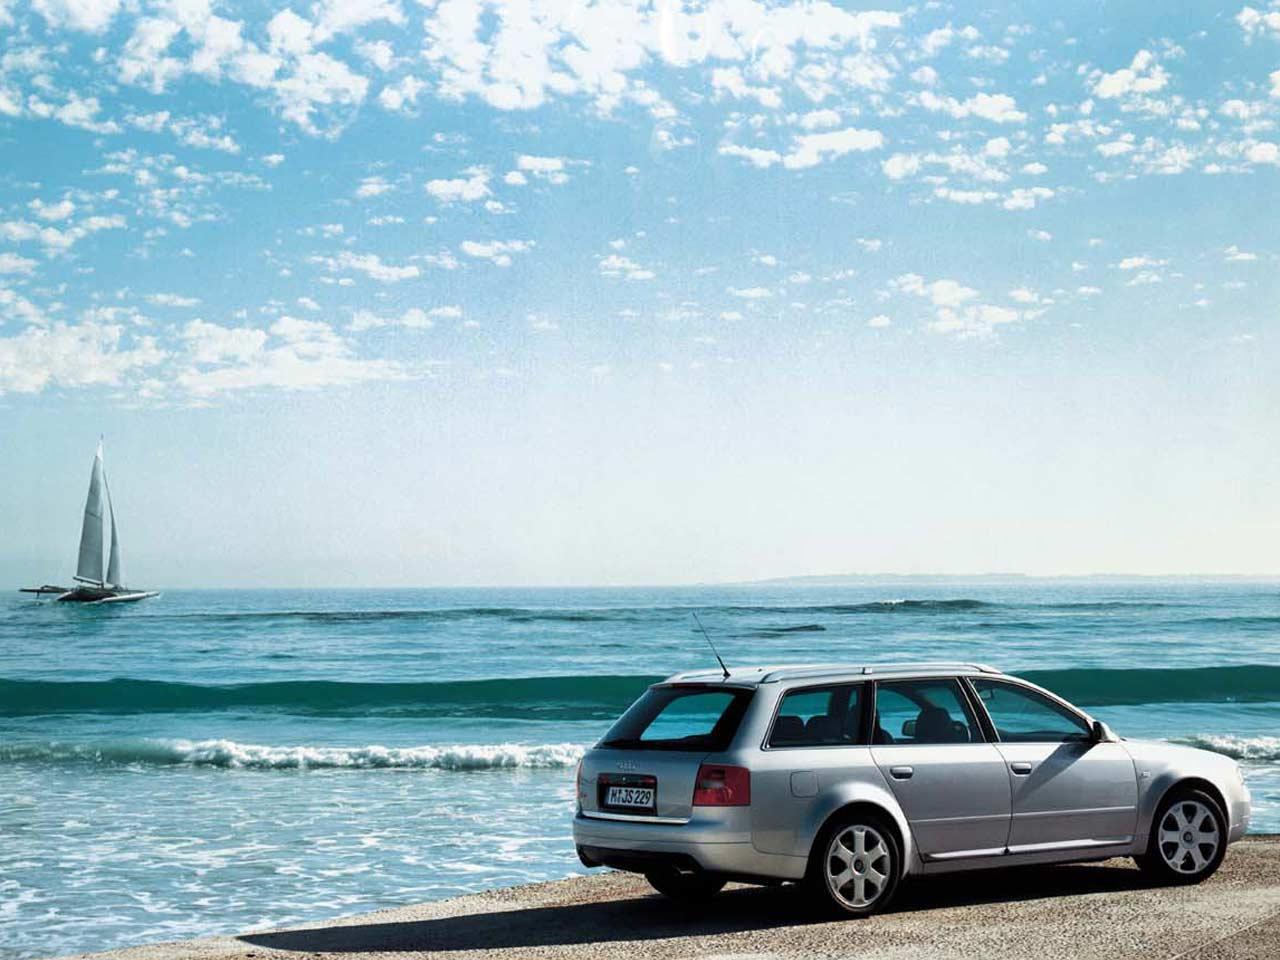 обои Audi S6 Avan на фоне тримарана  и моря фото